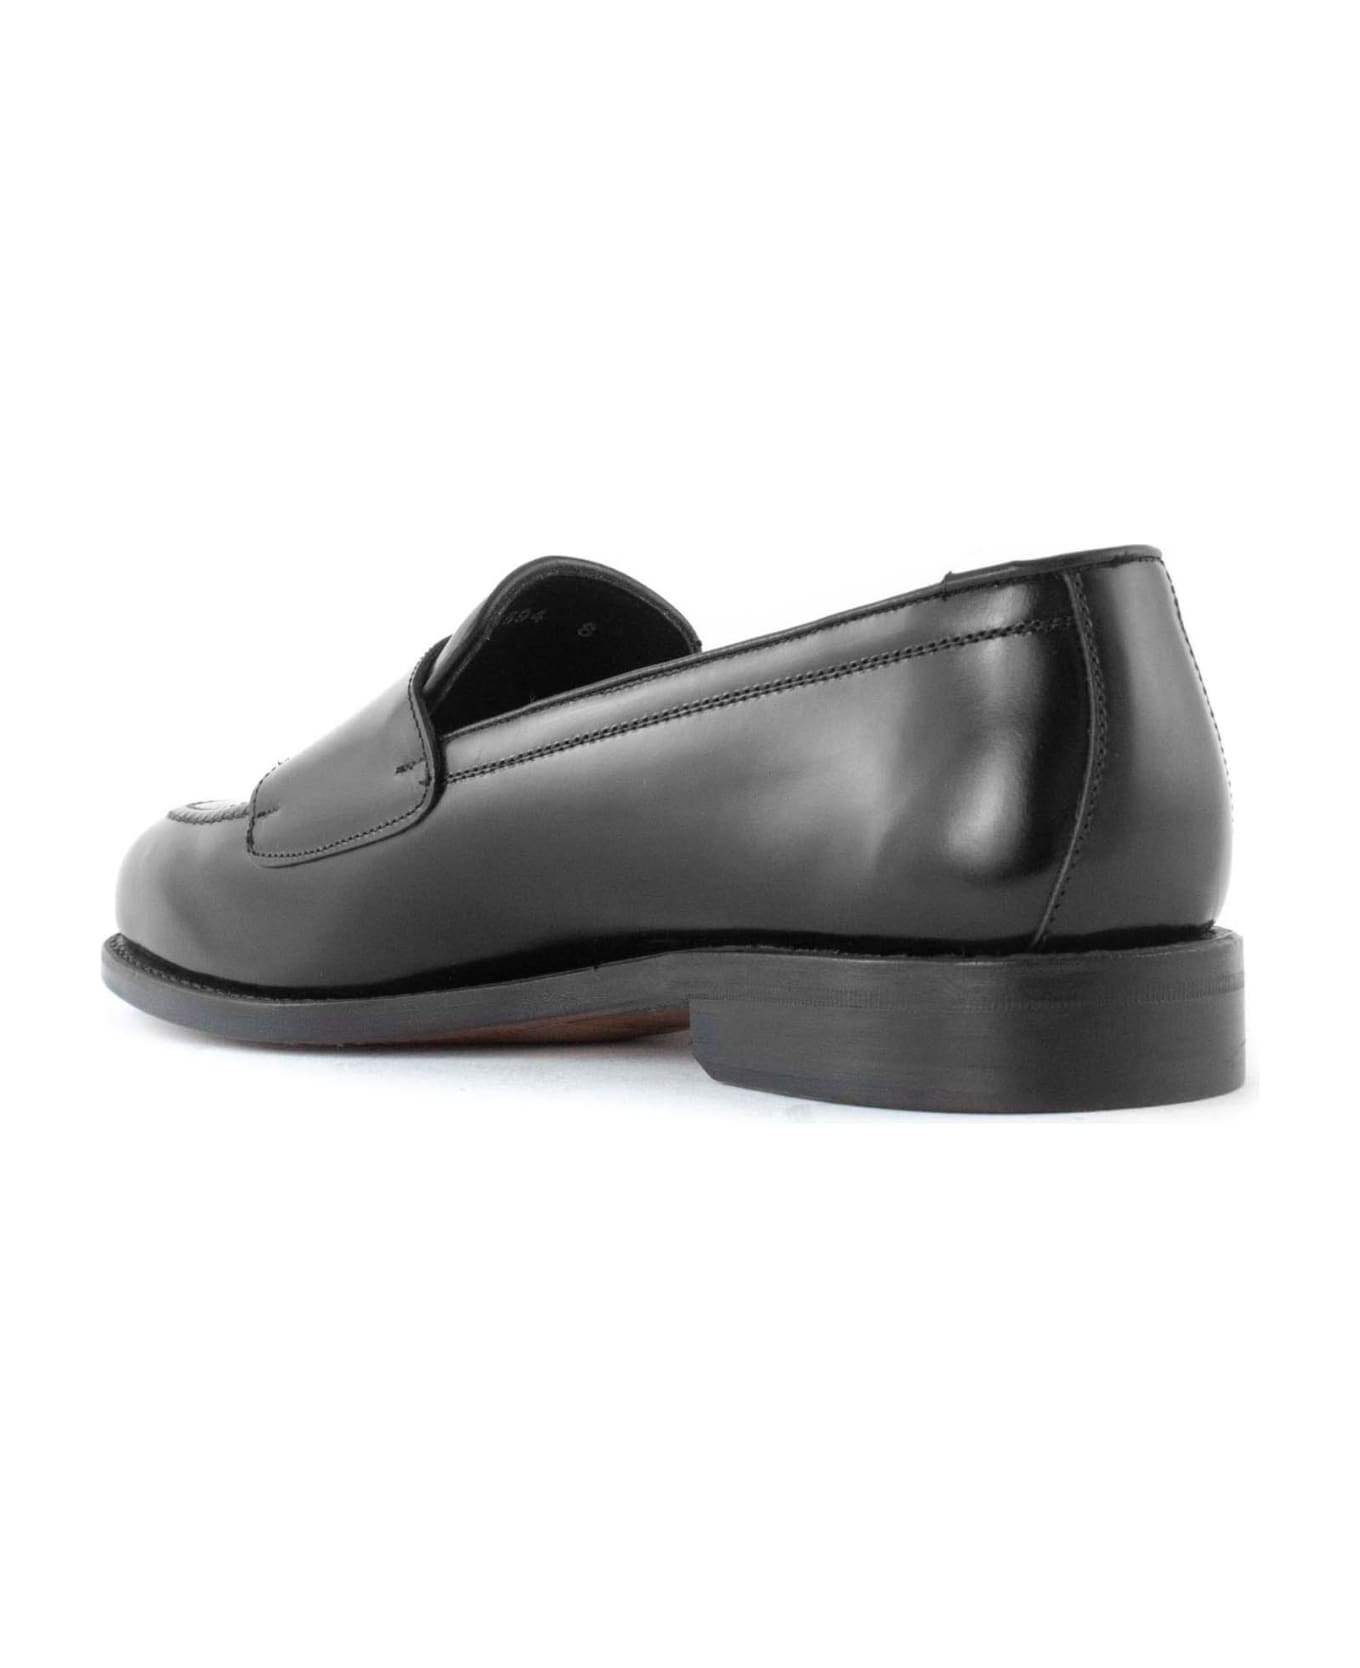 Berwick 1707 Black Calf Leather Monk Shoes - Black